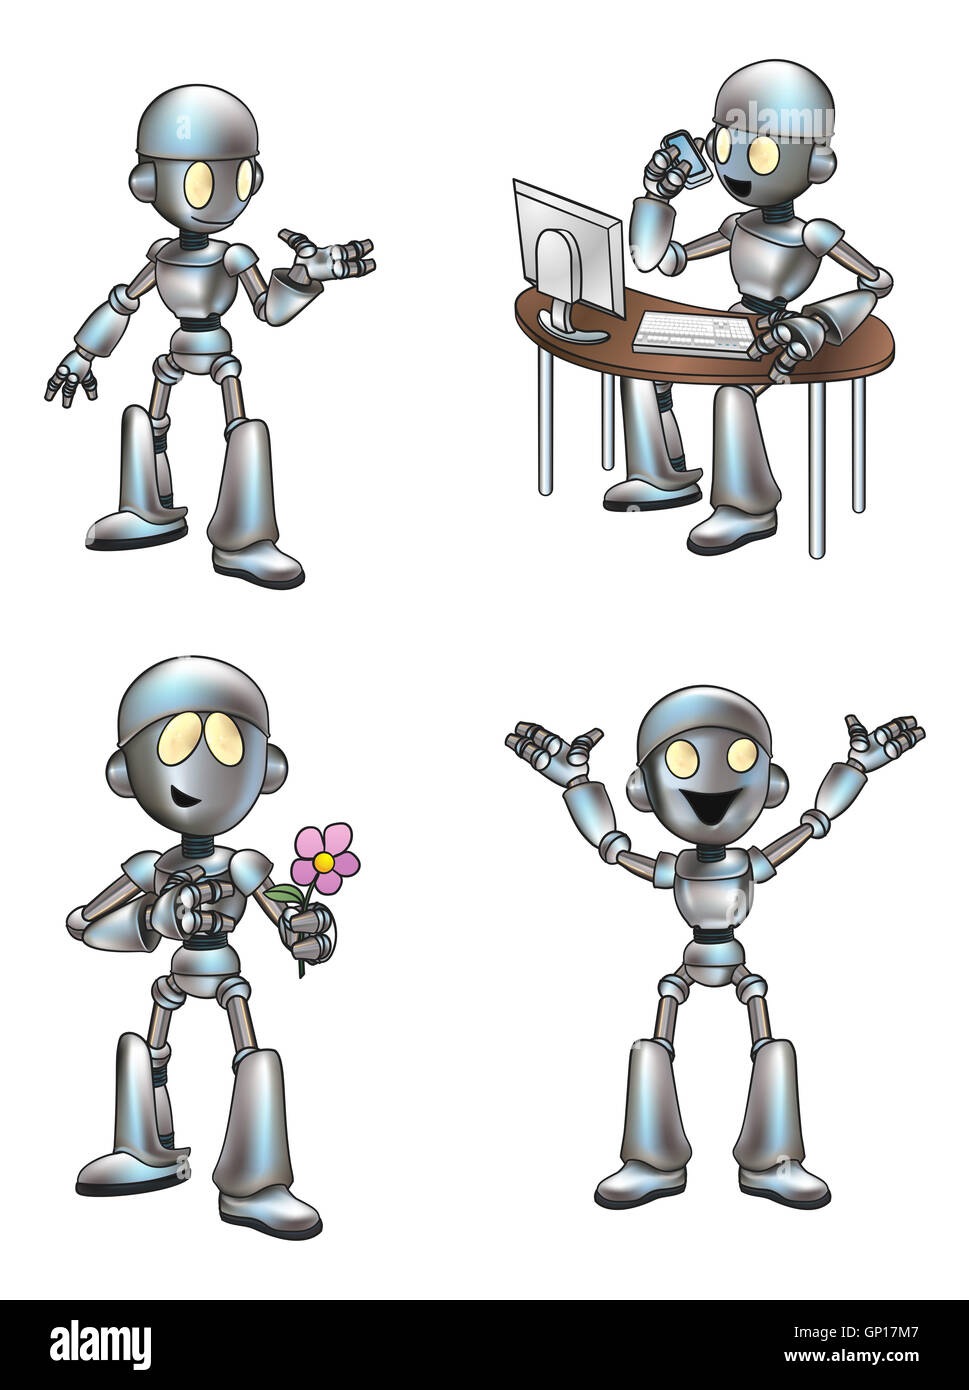 Cartoon robot mascot character in various poses Stock Photo